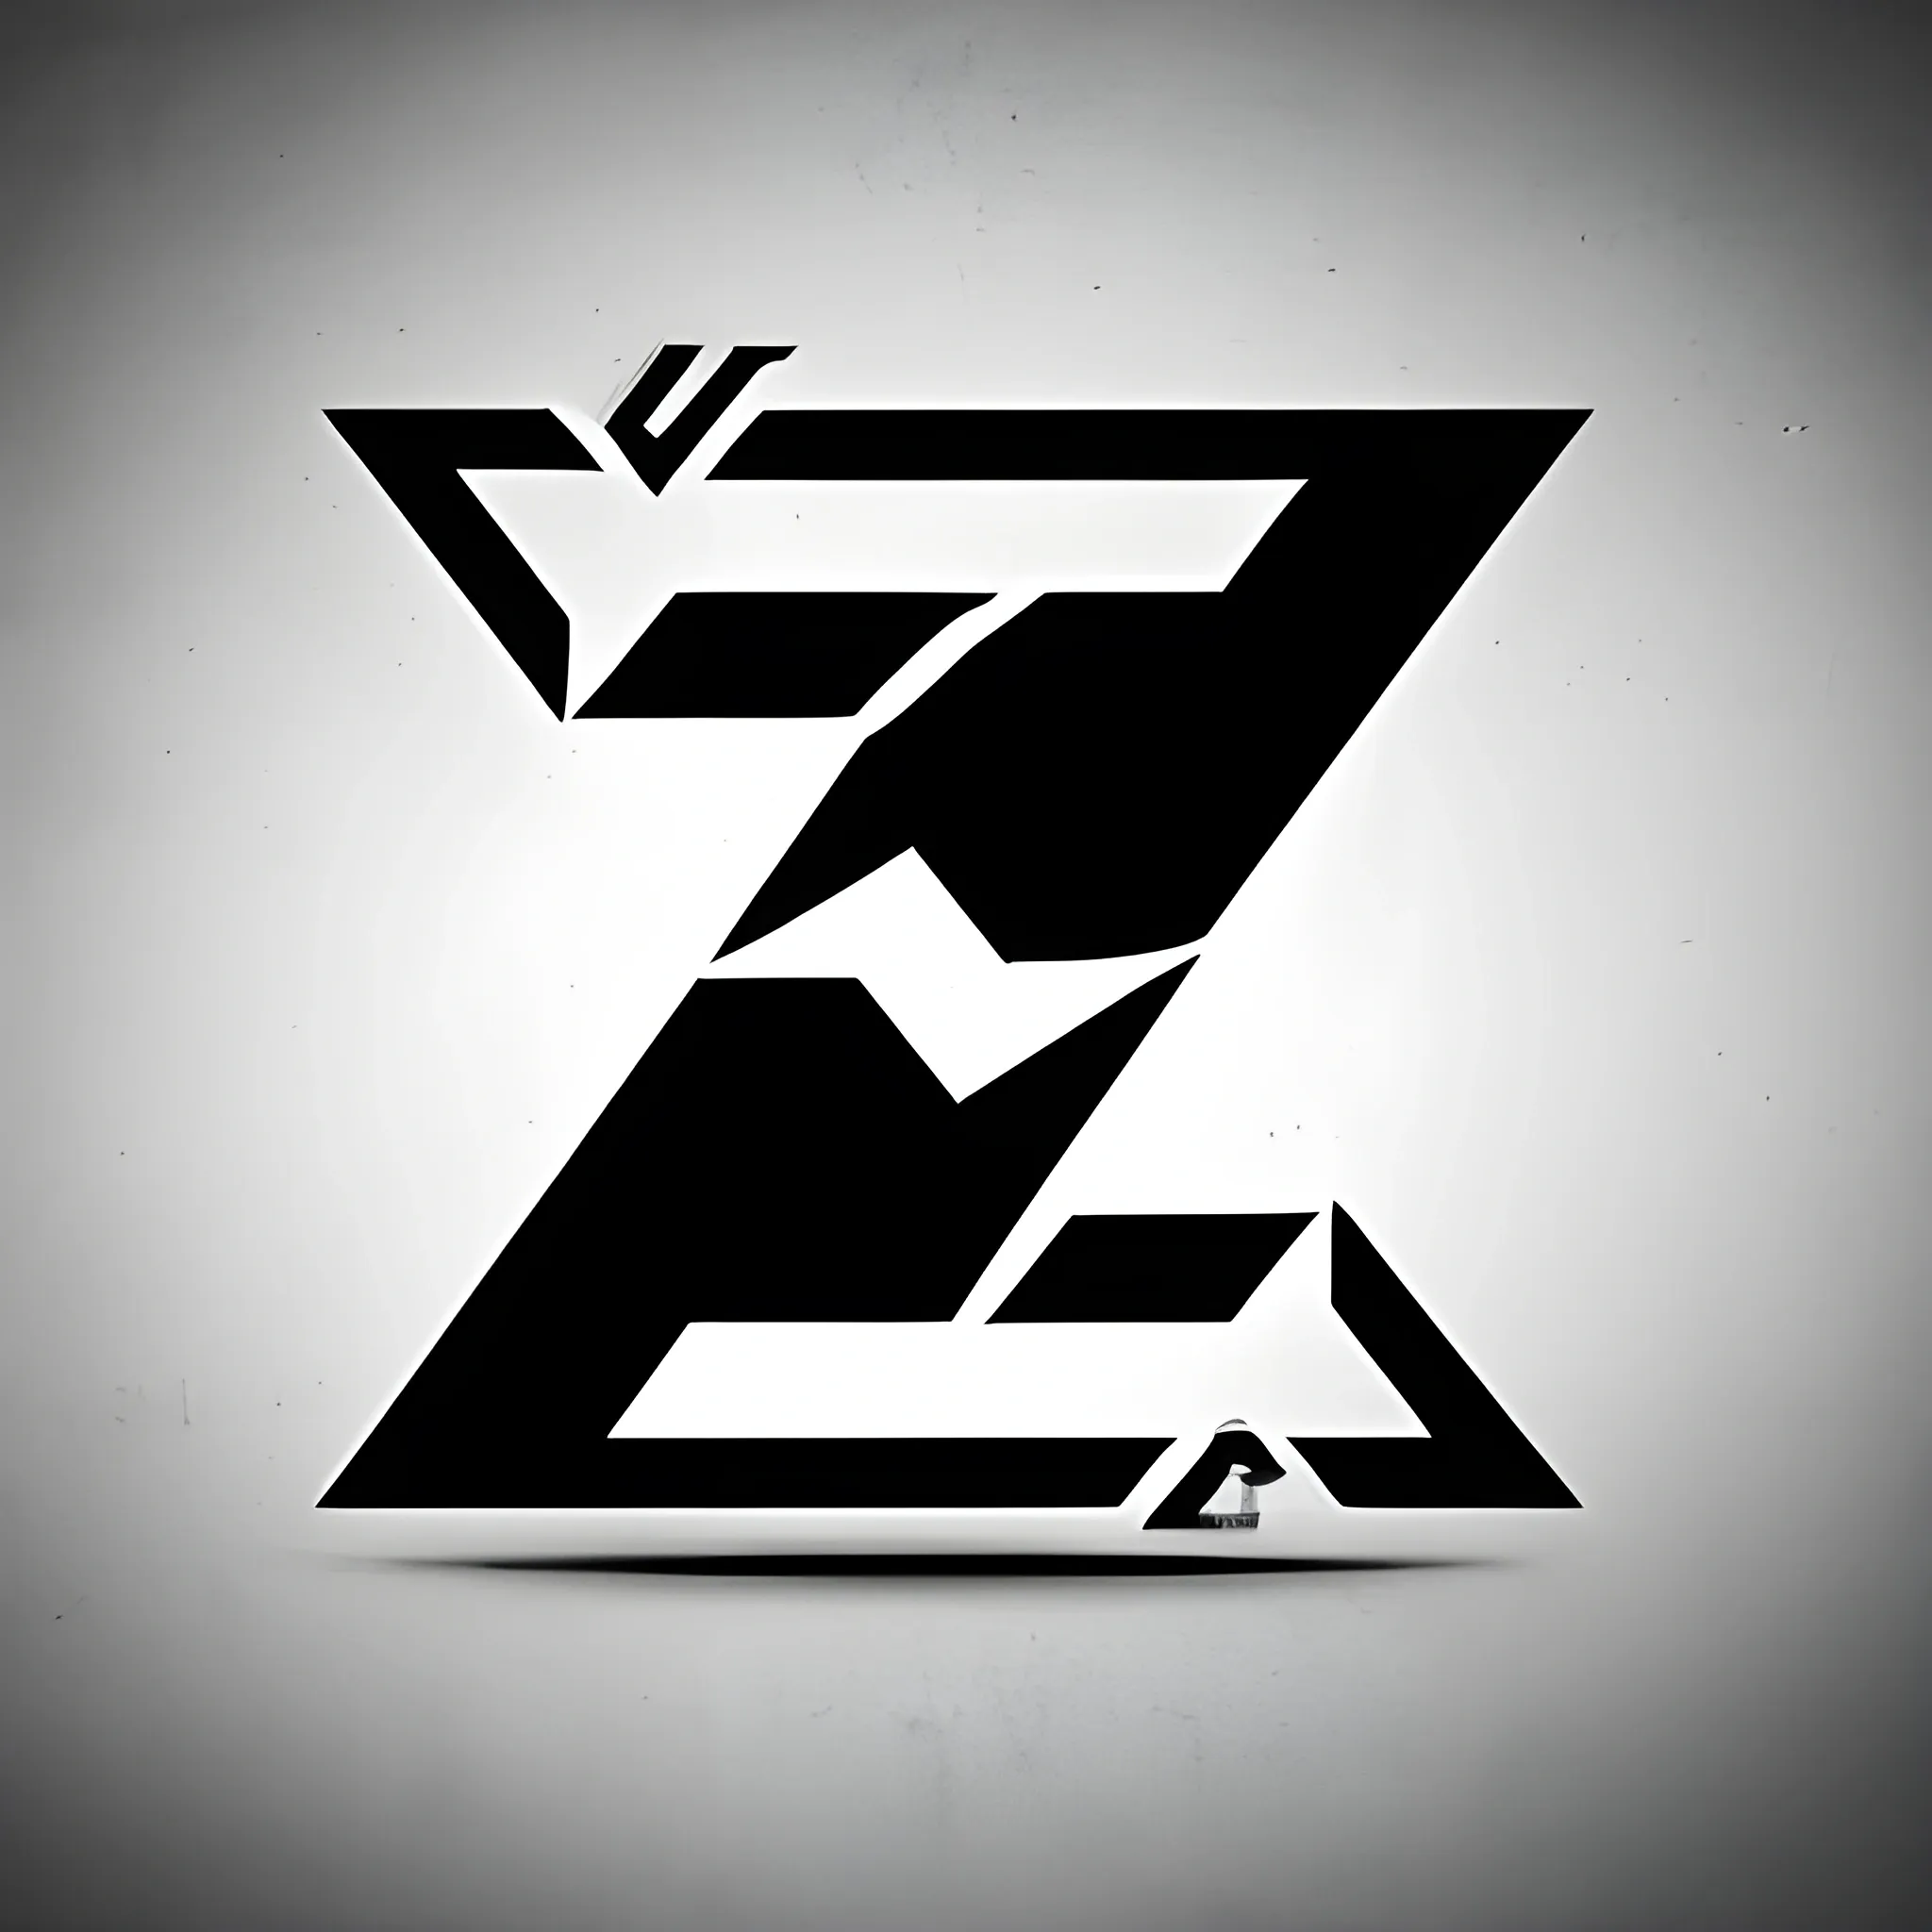 Me modern letter logo design with swoosh Vector Image